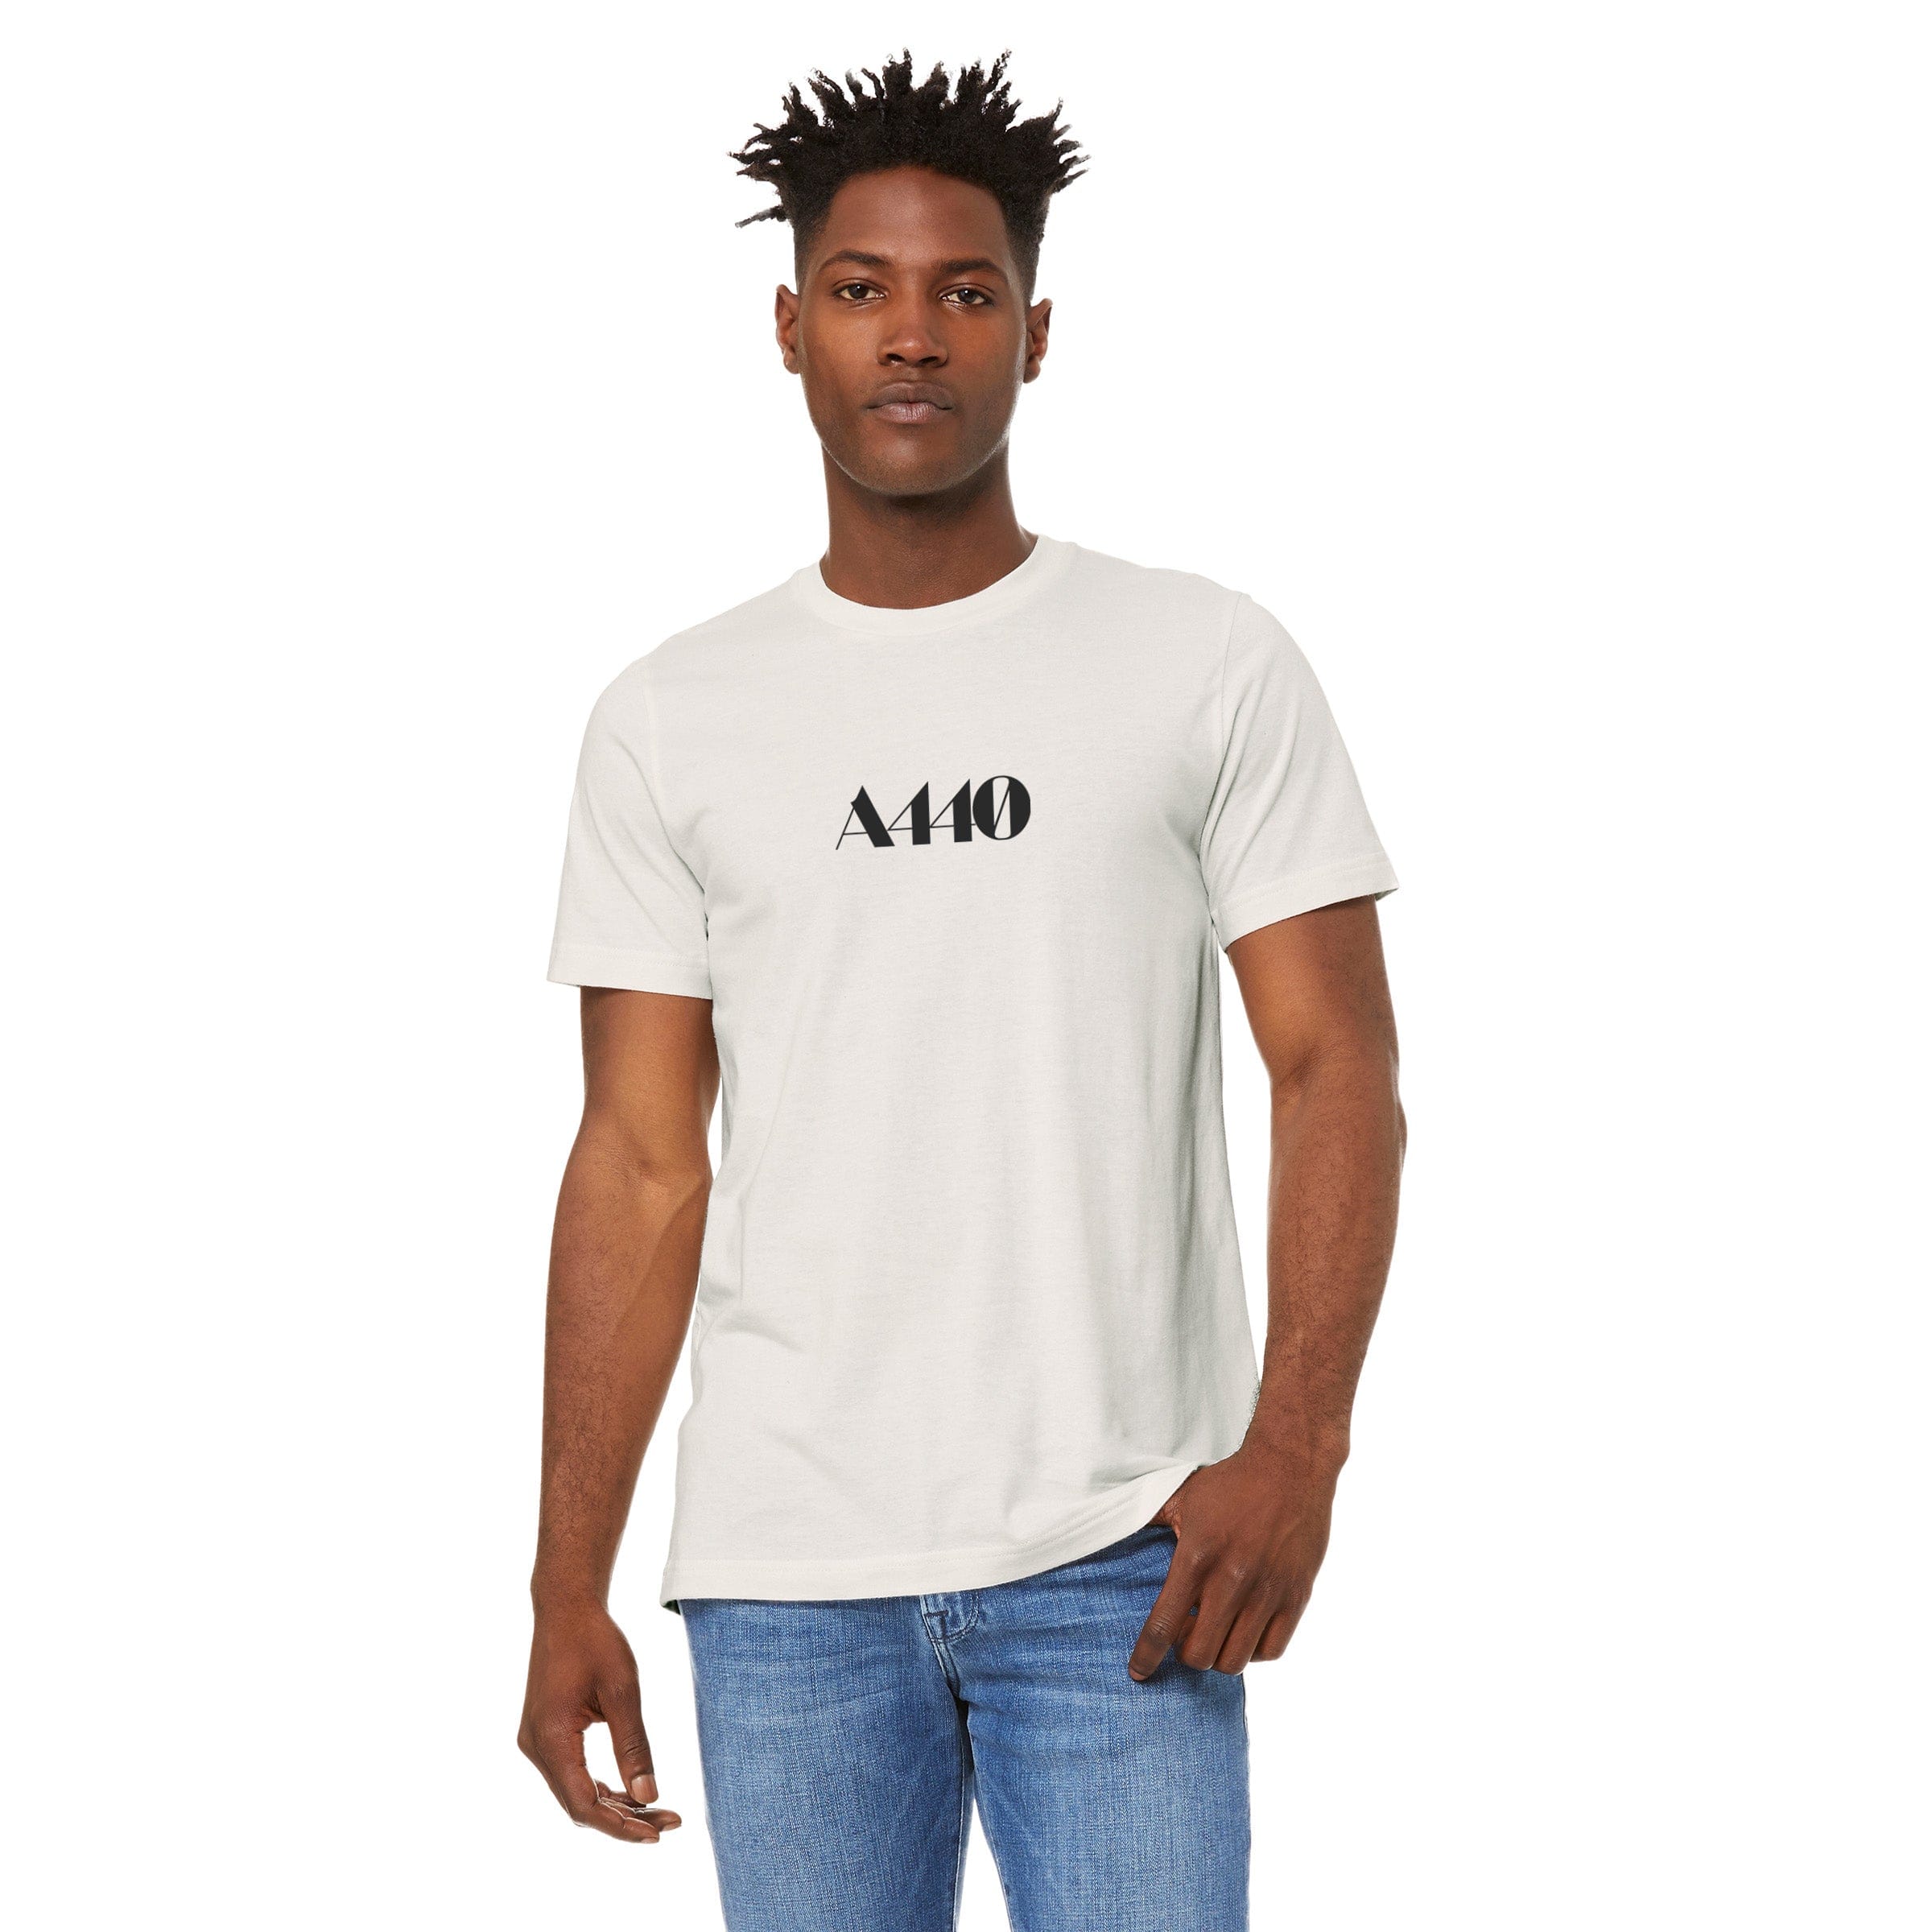 A440: Indie Film T-Shirt